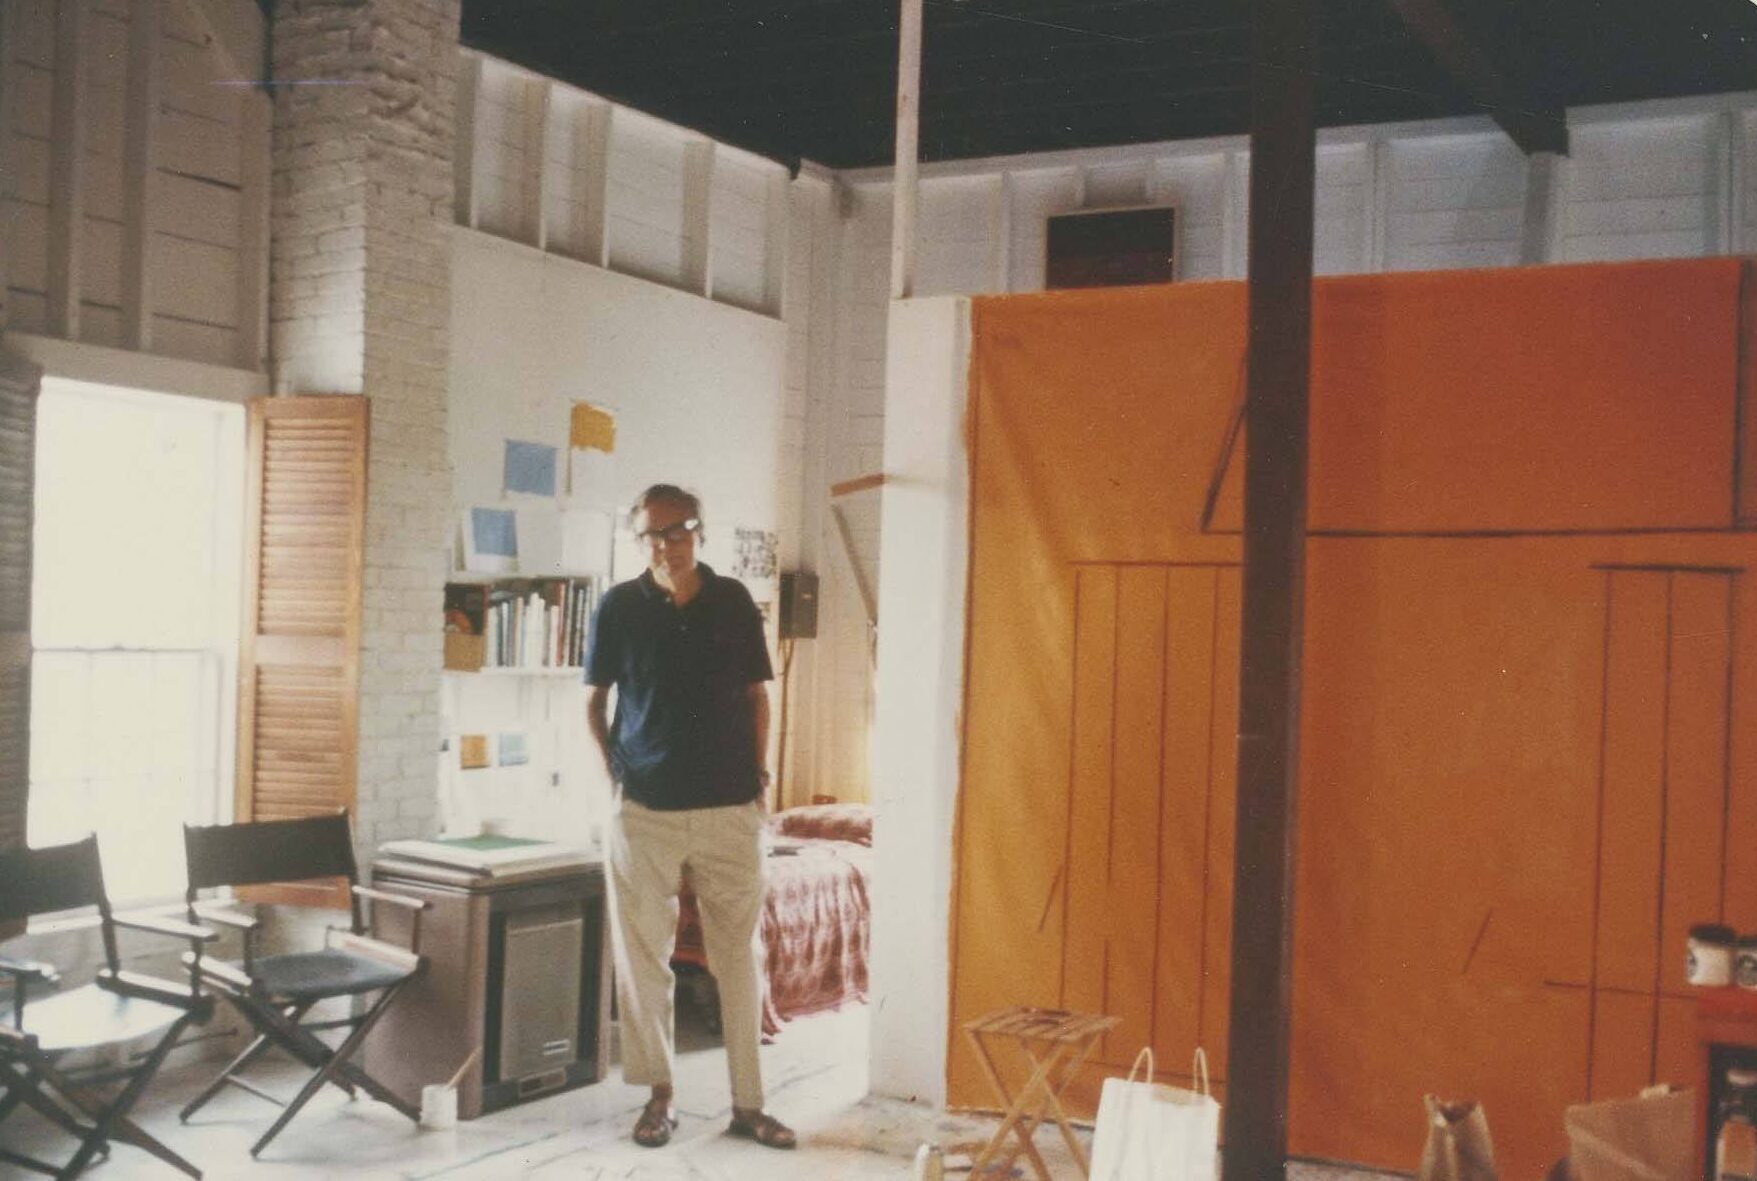 Motherwell in his Provincetown, Mass. Studio, summer 1969